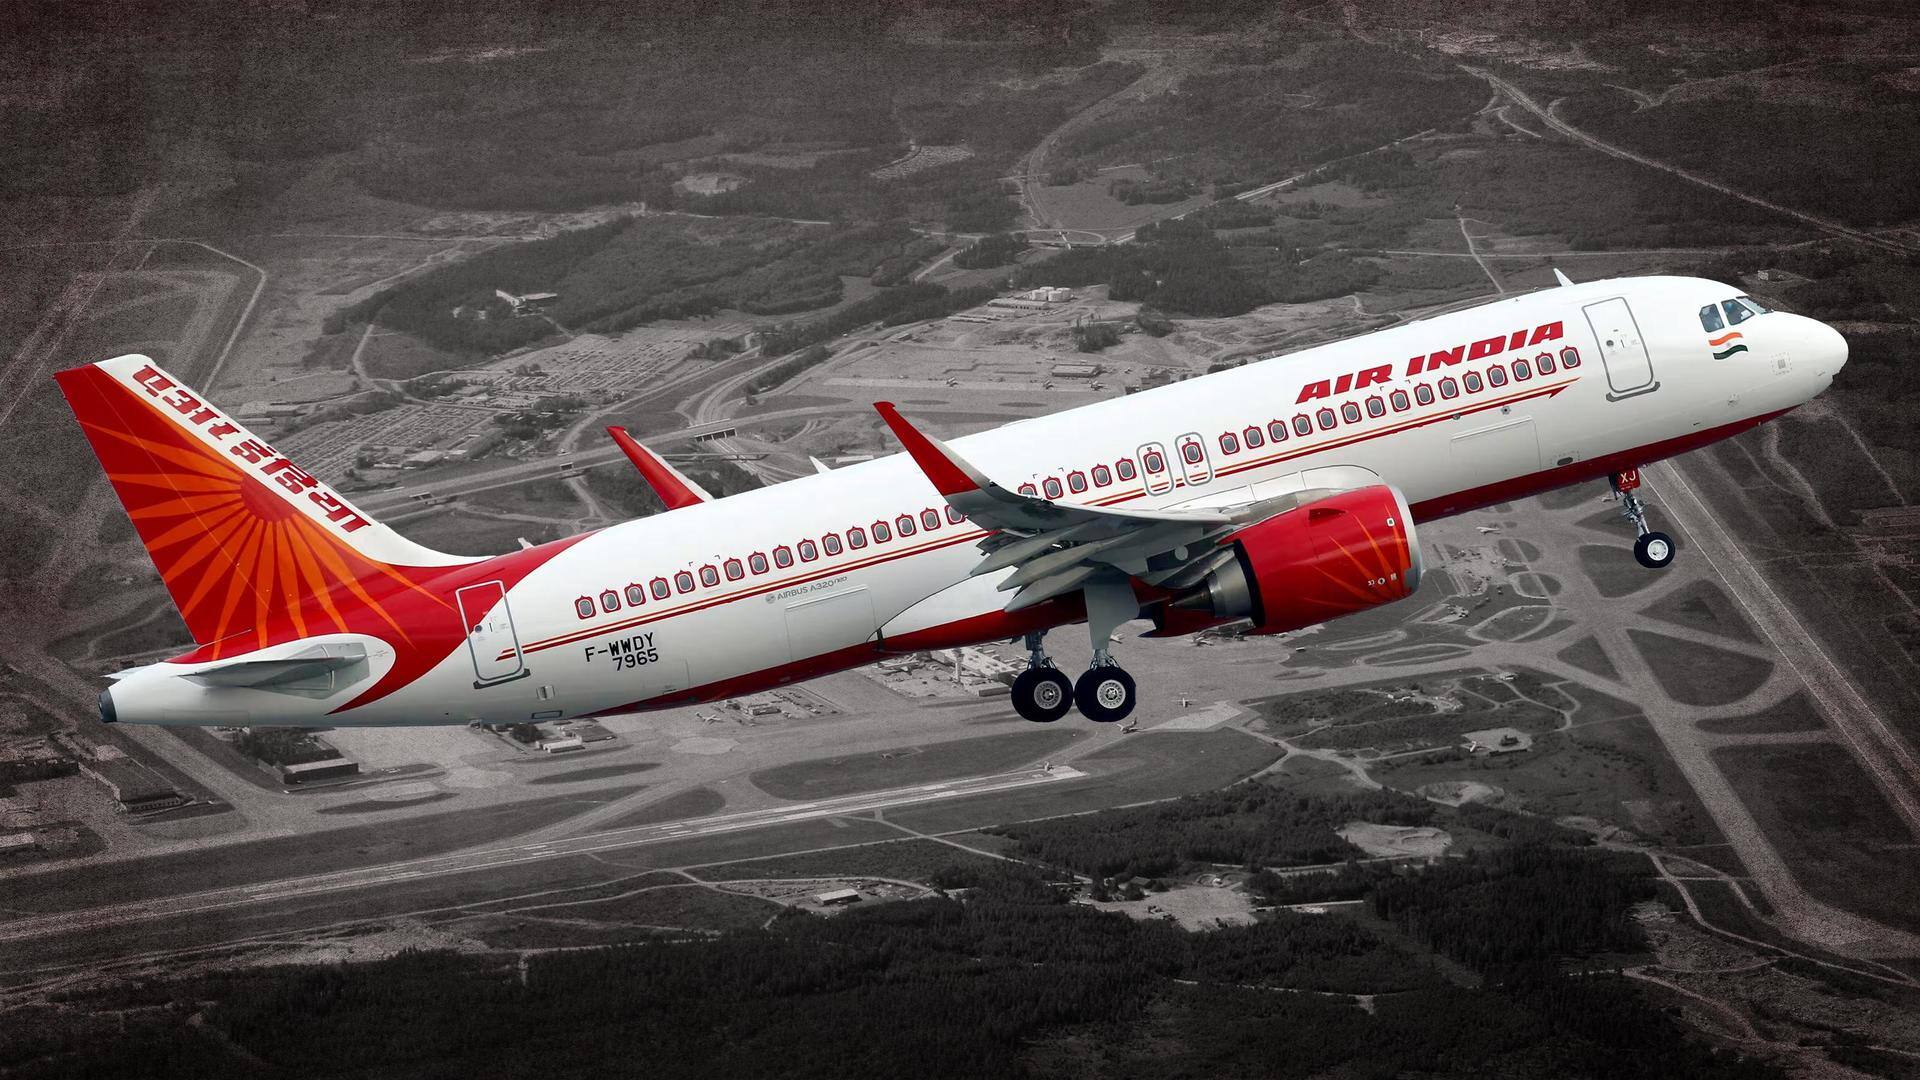 Air India Delhi-San Francisco flight diverted to Russia after glitch